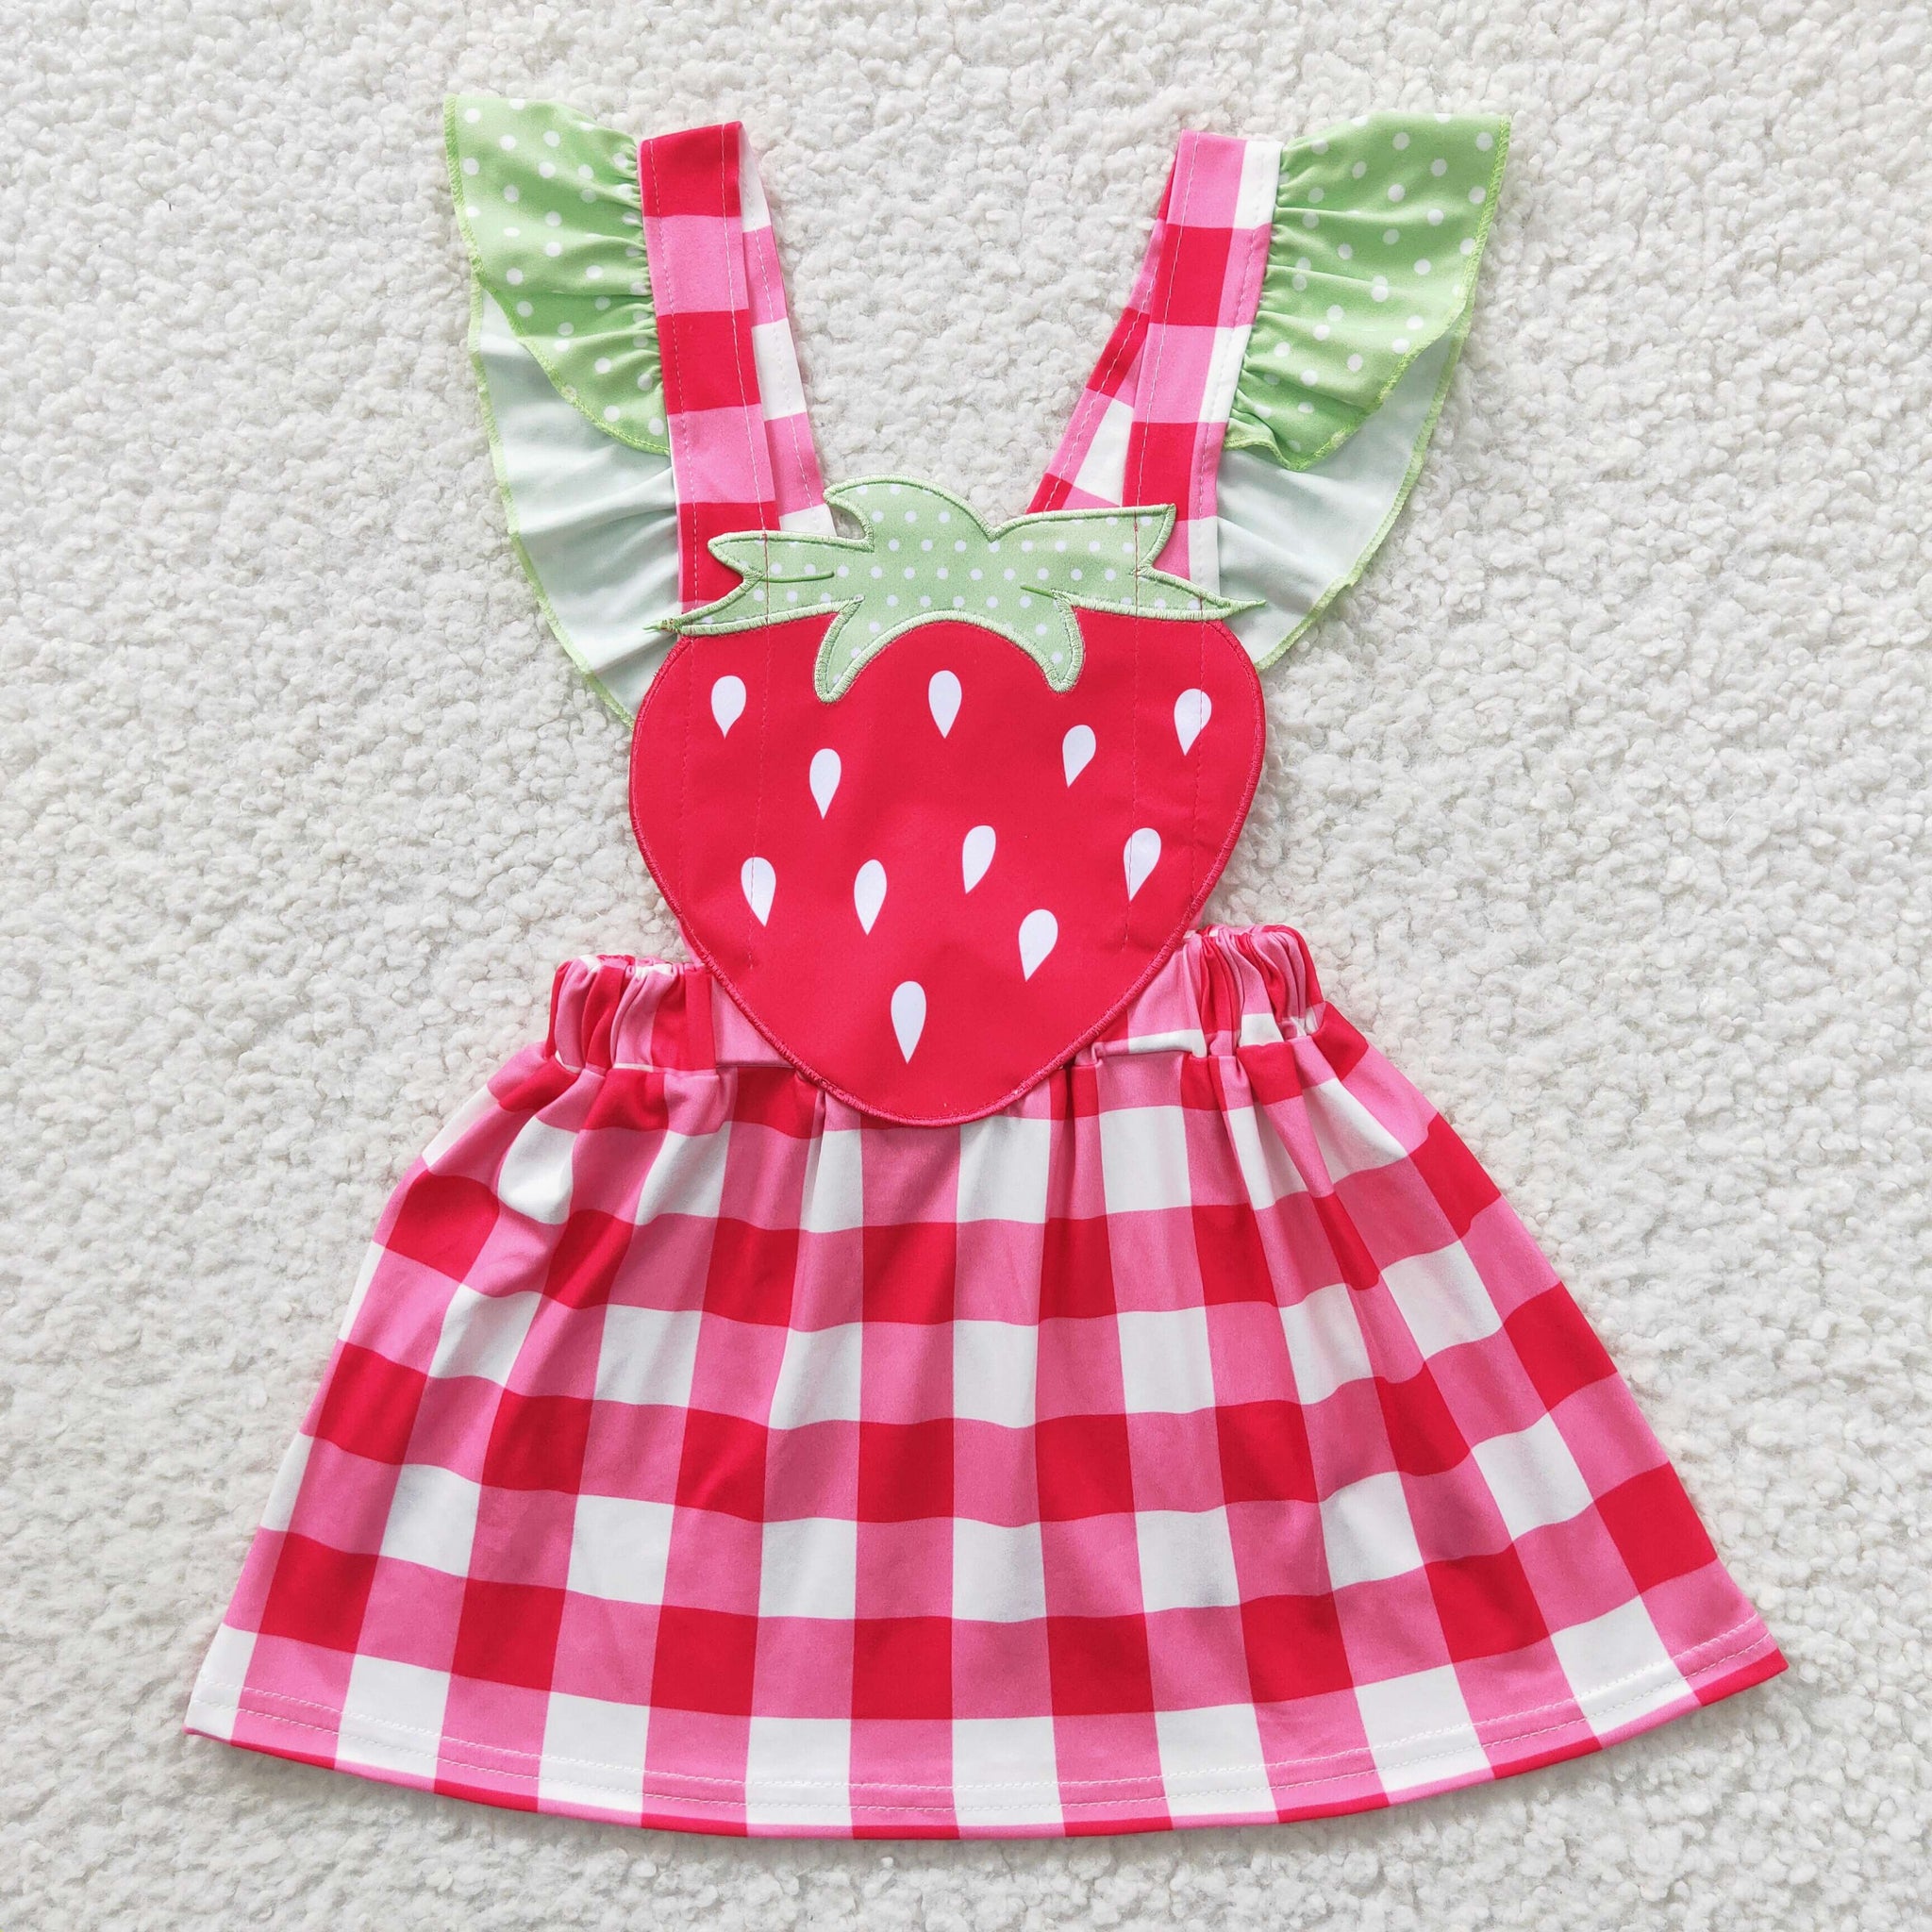 GSD0241 kids clothes girls strawberry summer dress